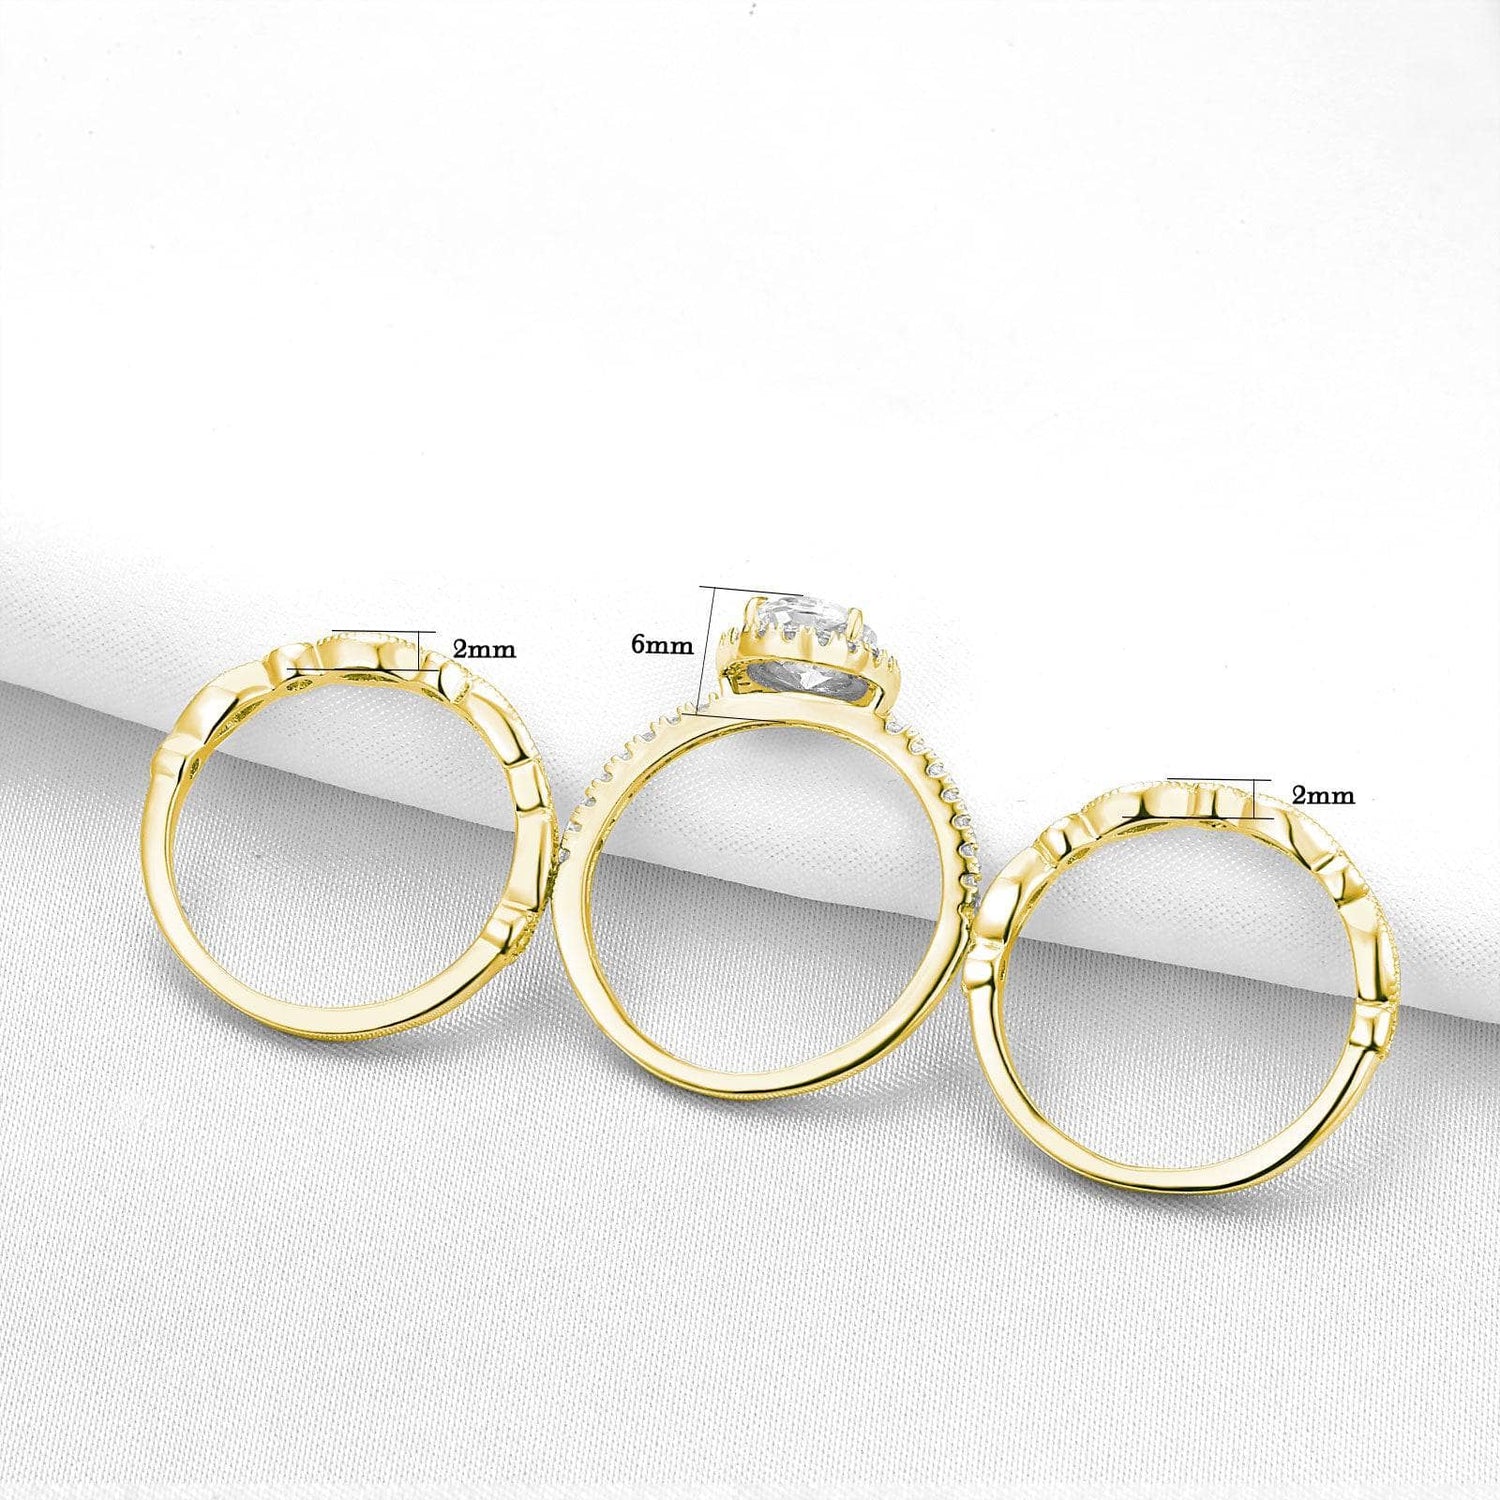 Oval Cut Created Diamond 3pcs Wedding Ring Set-Black Diamonds New York